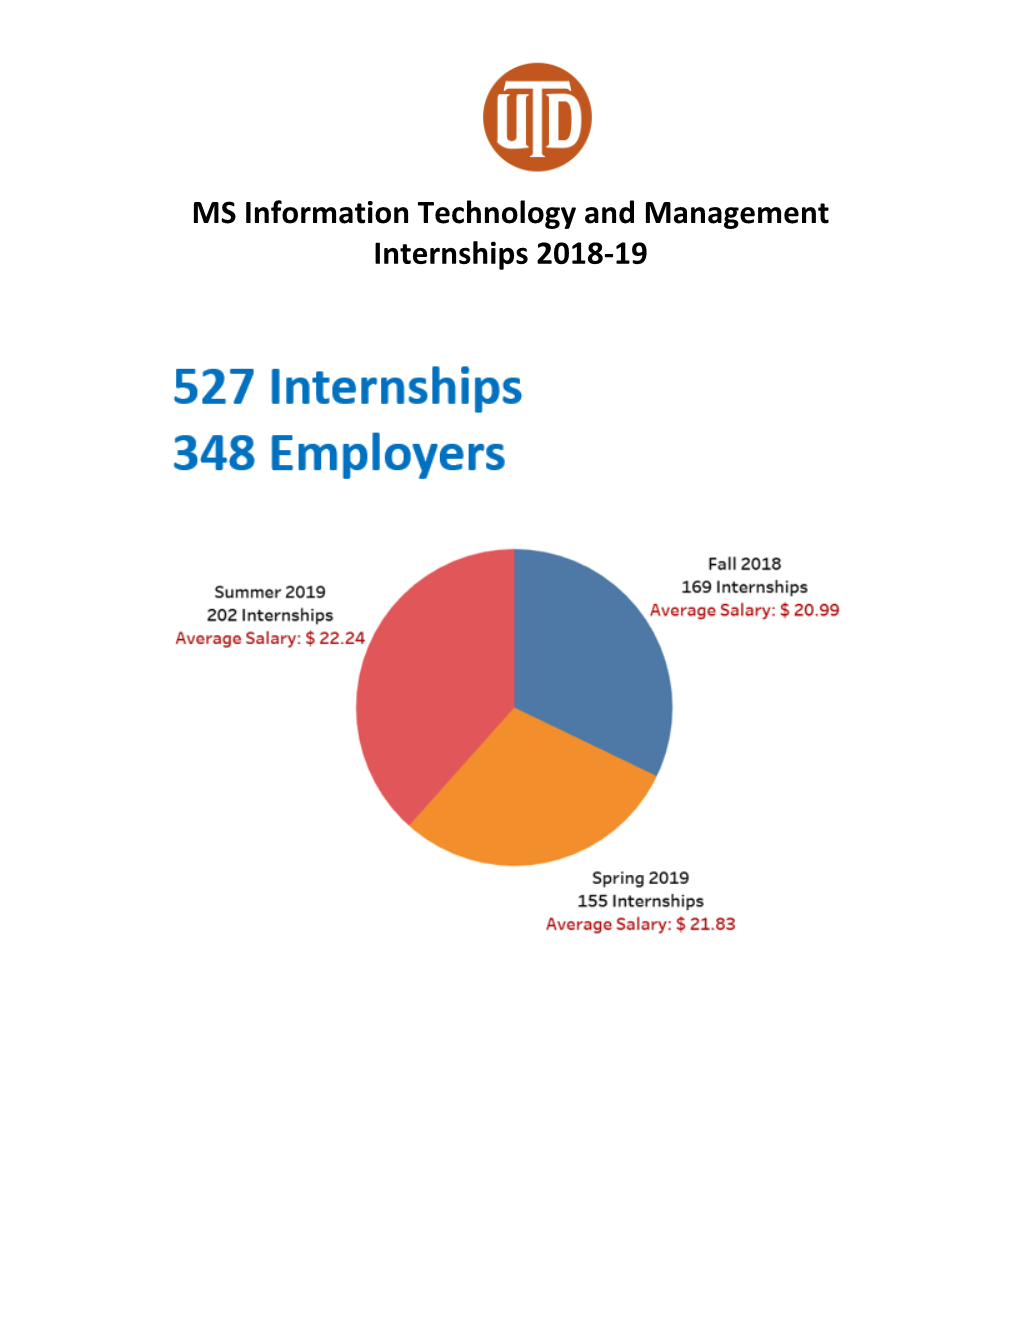 MS Information Technology and Management Internships 2018-19